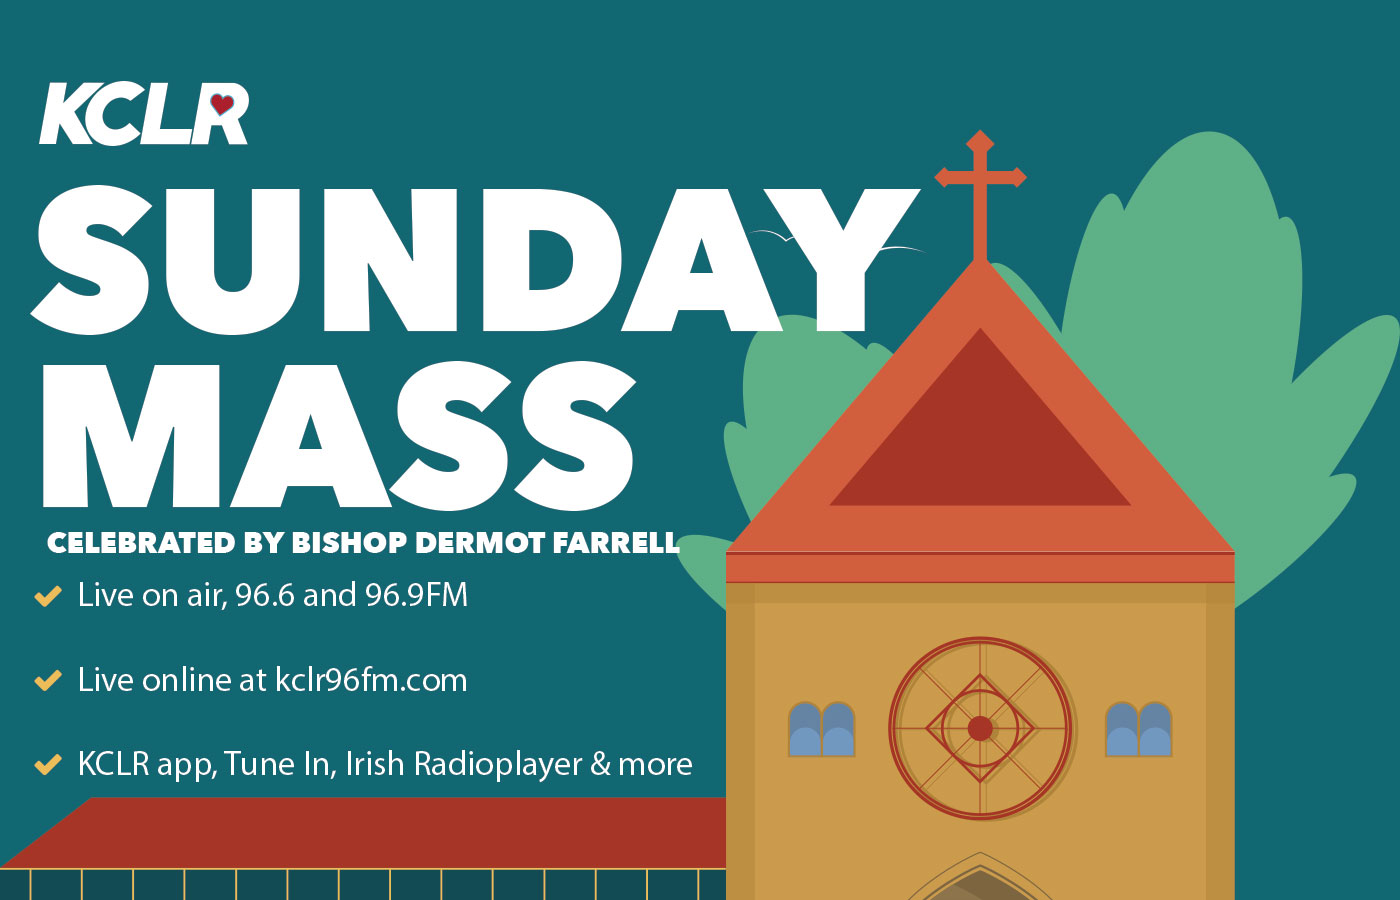 KCLR Sunday Mass